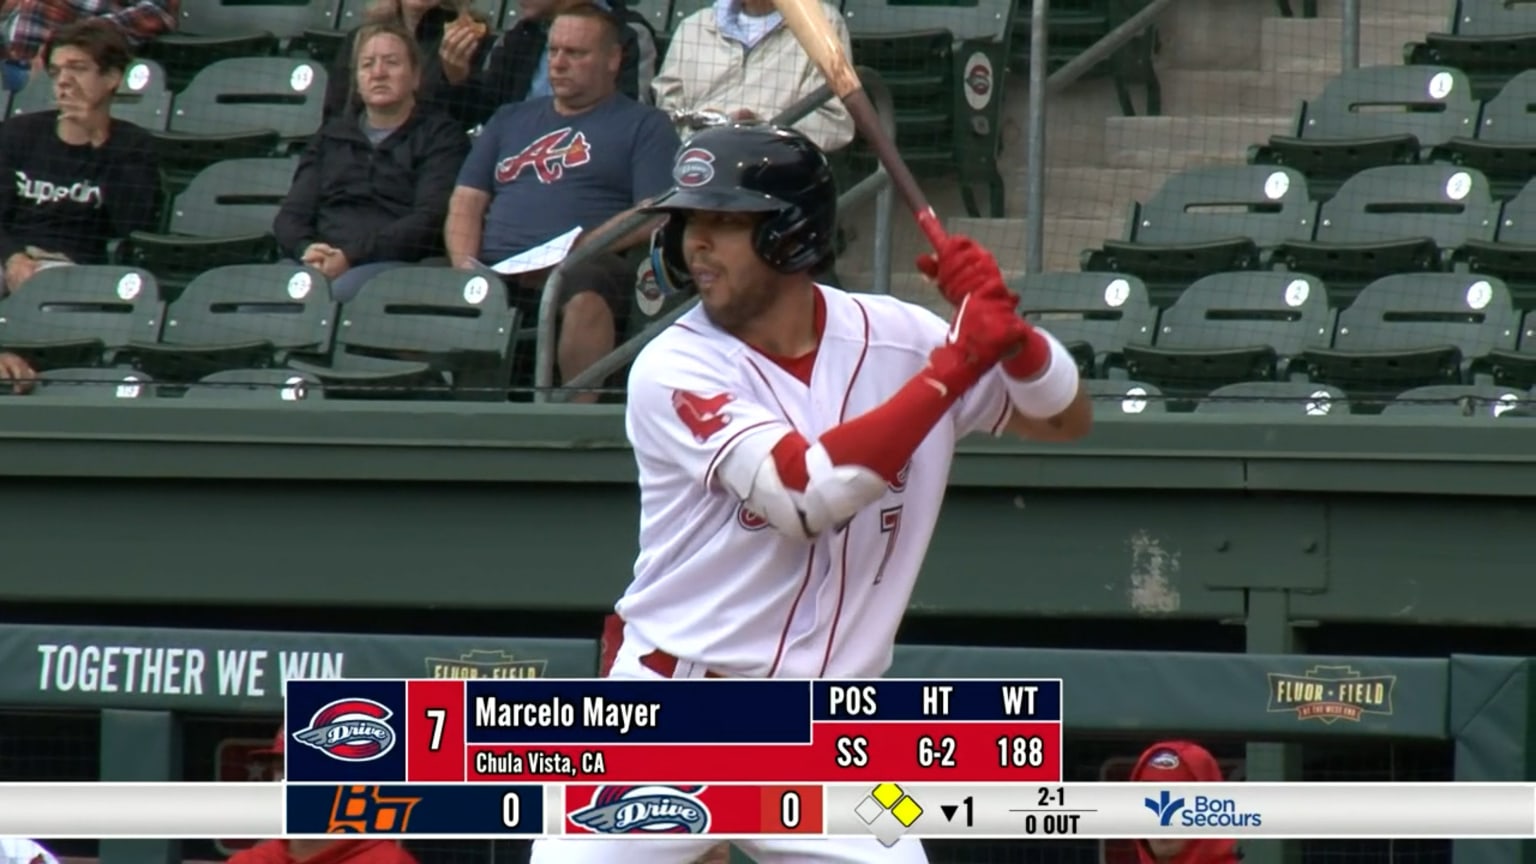 Top Red Sox prospect Marcelo Mayer earns South Atlantic League